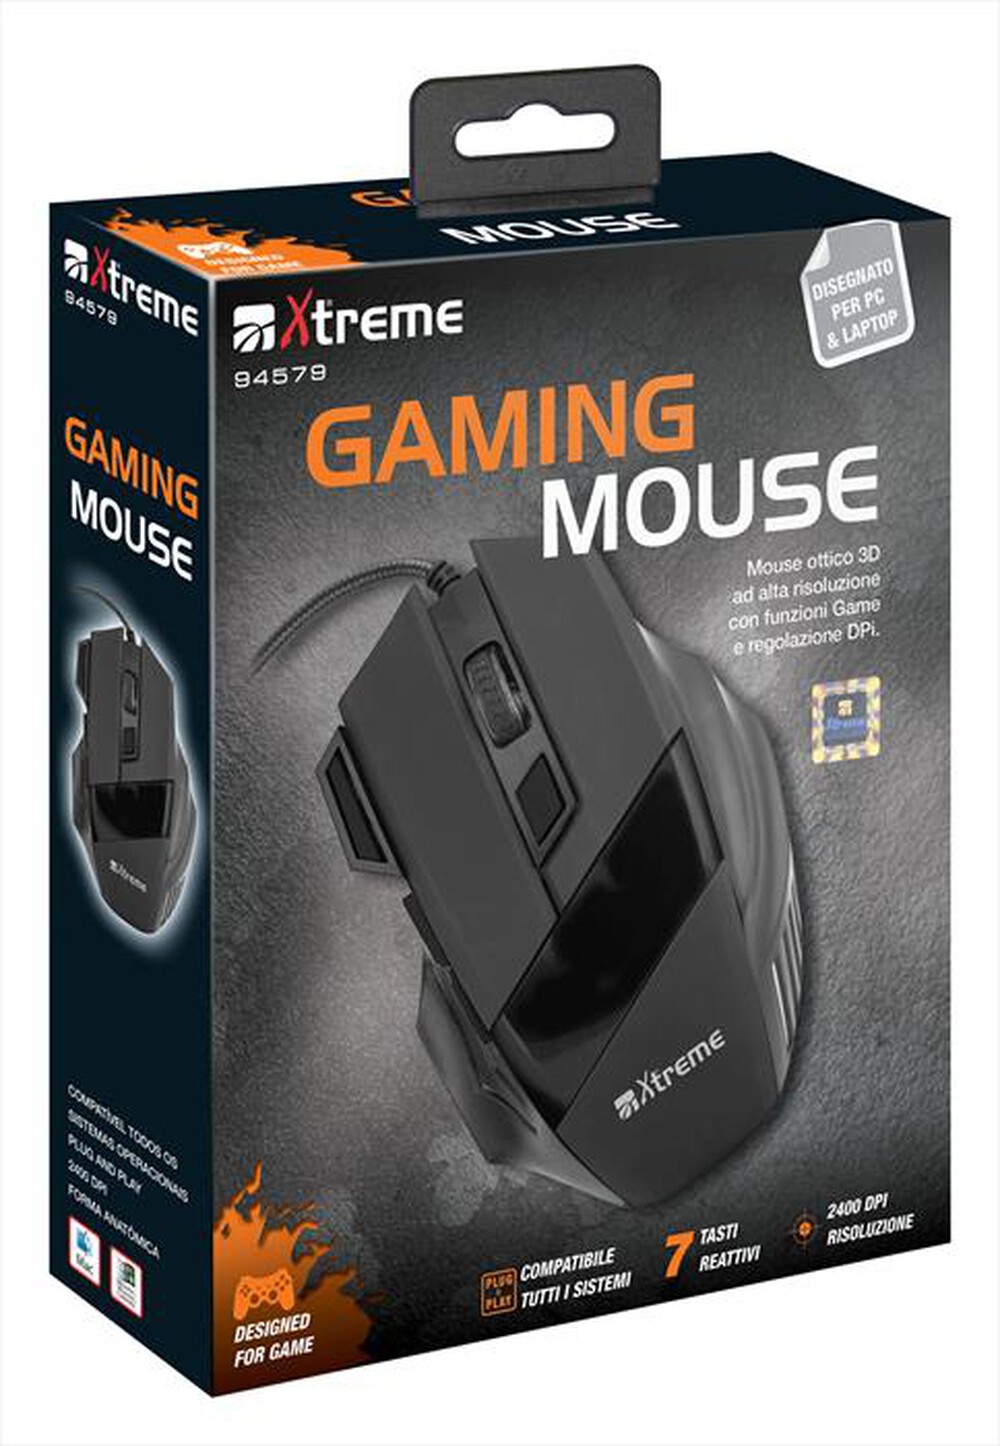 "XTREME - 94579 - Mouse gaming USB ottico 3D-NERO"